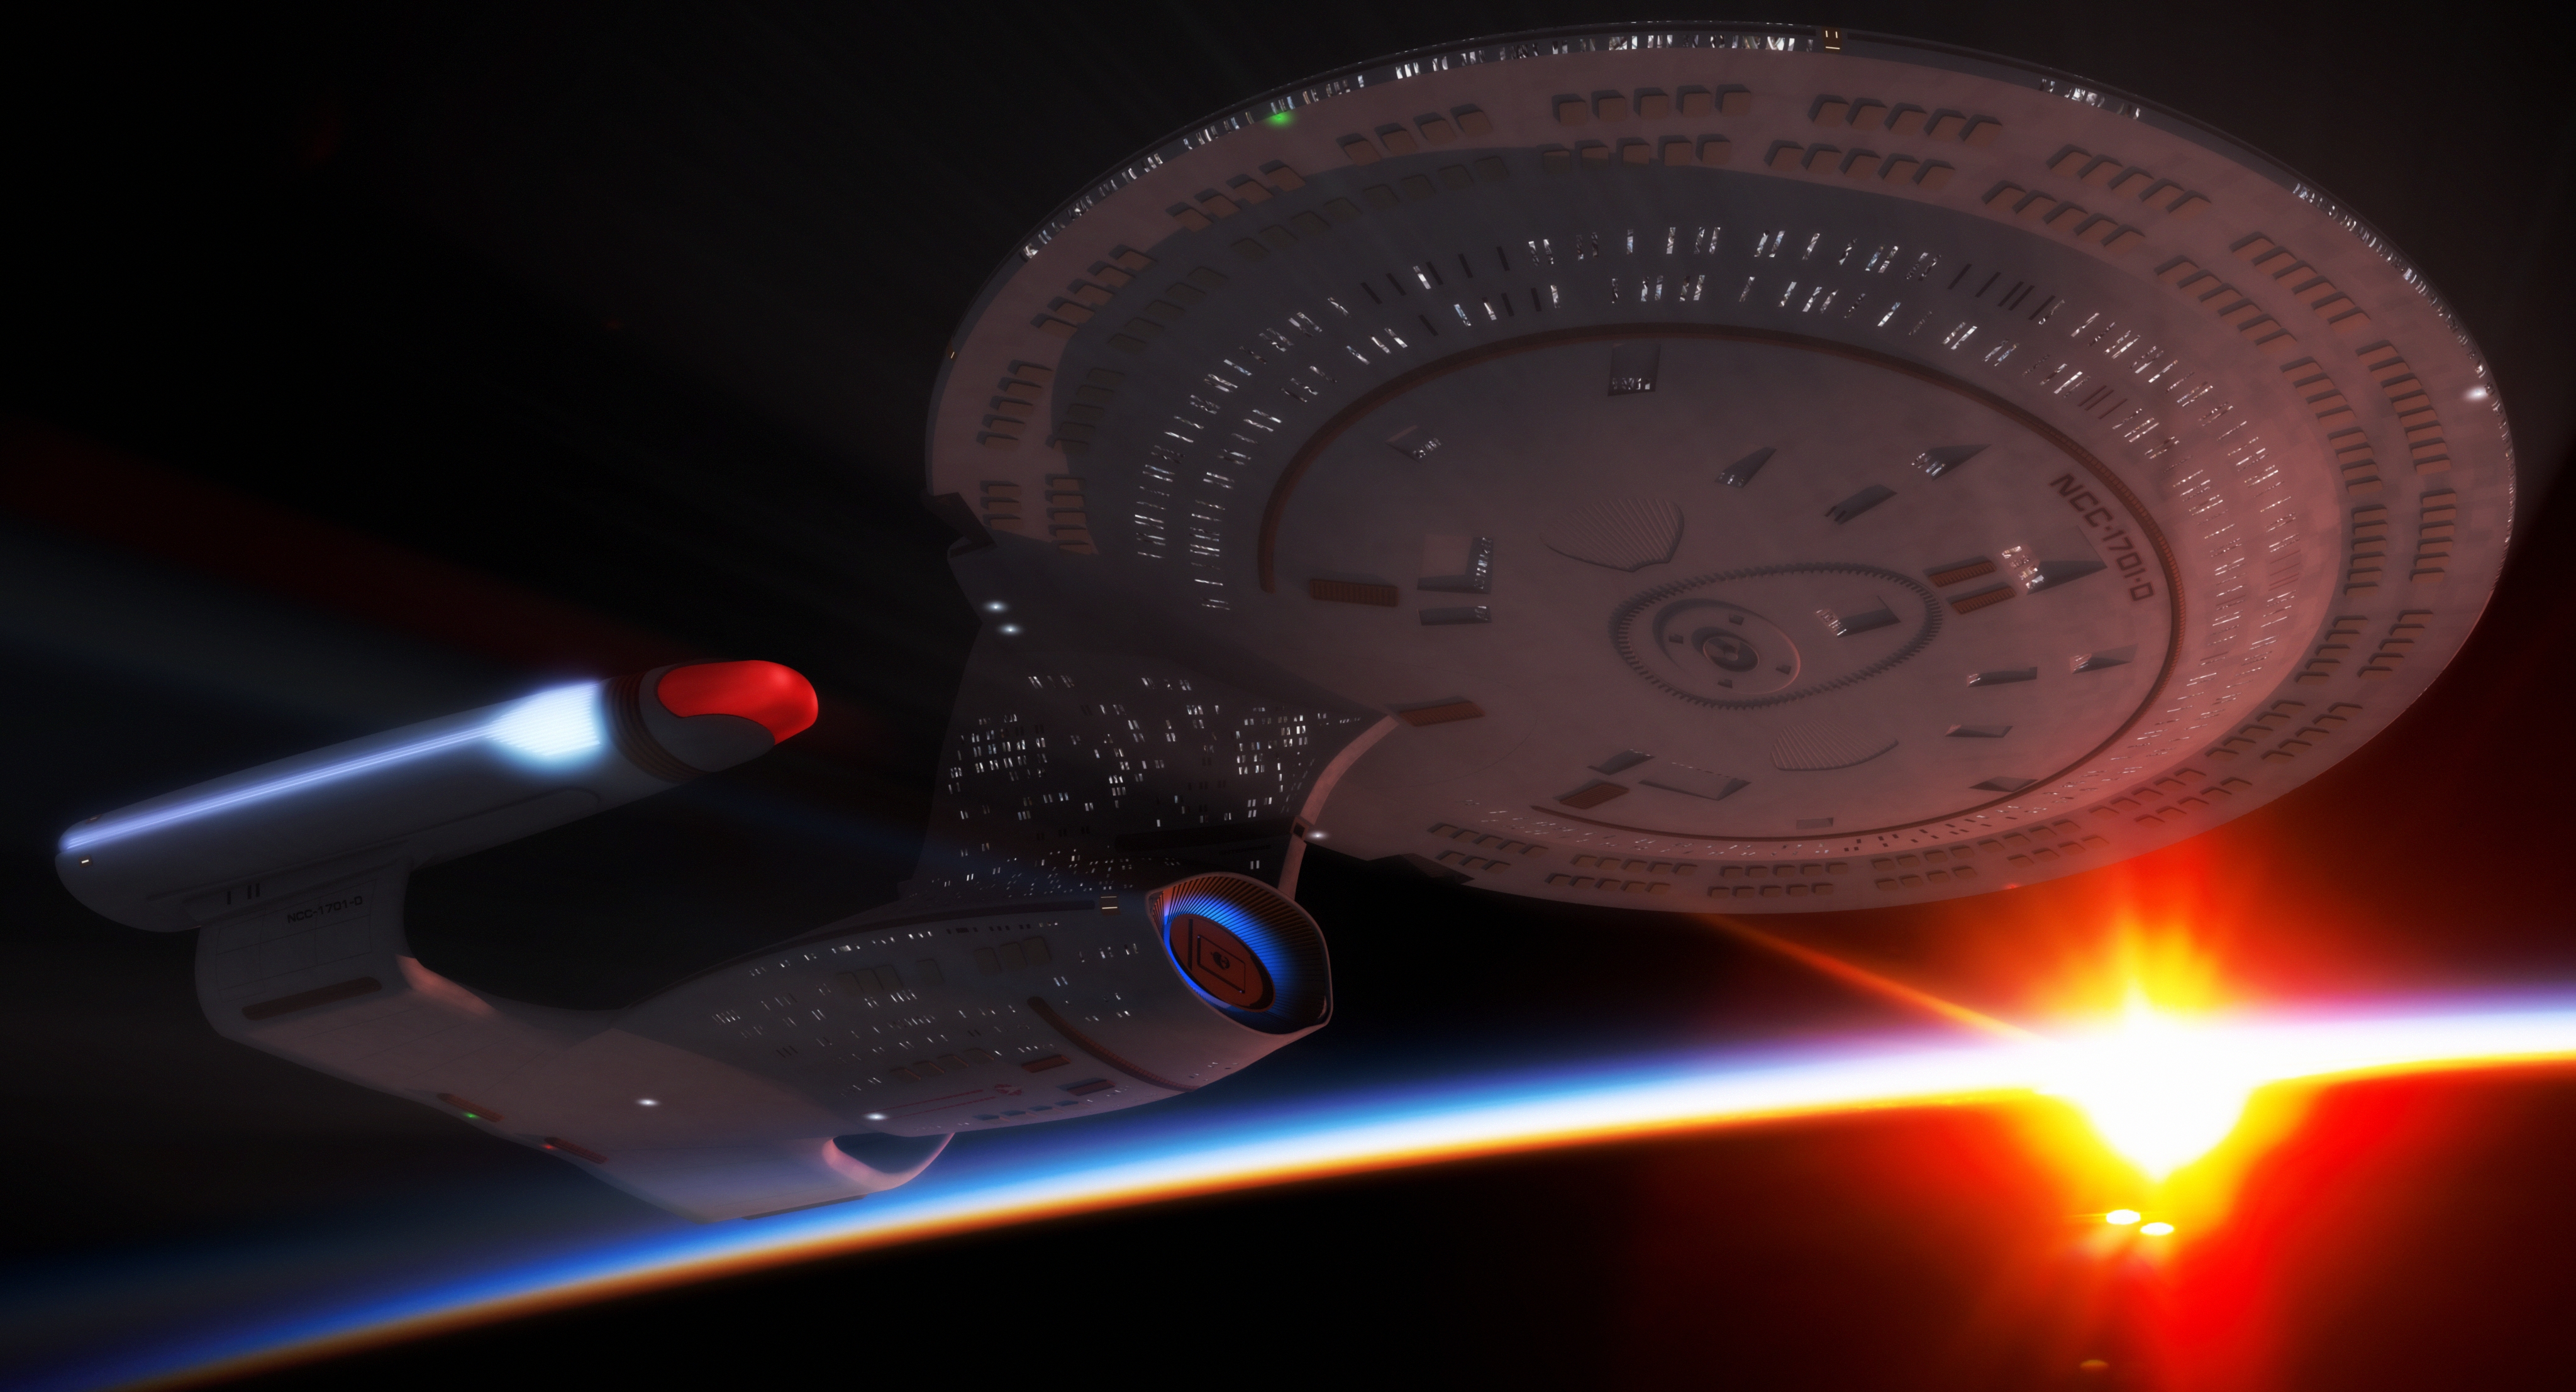 Picard's Enterprise